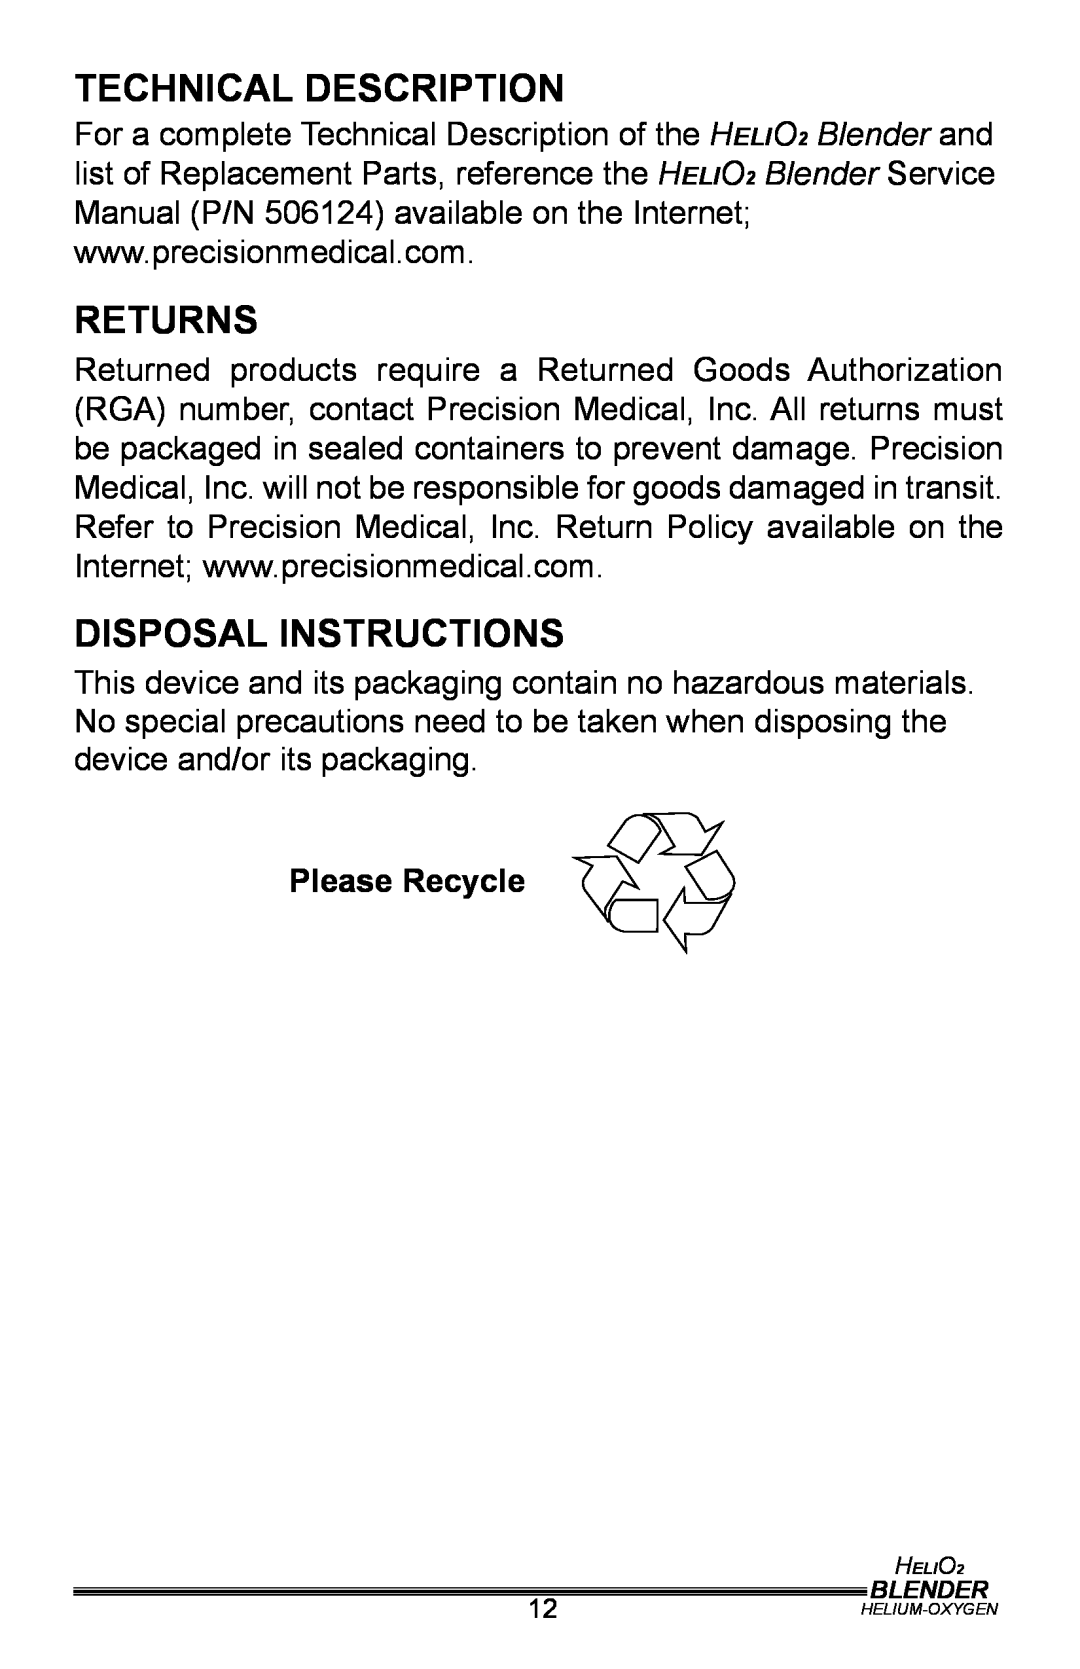 Helio PM5400, PM5500 user manual Technical Description, Returns, Disposal Instructions, Please Recycle 